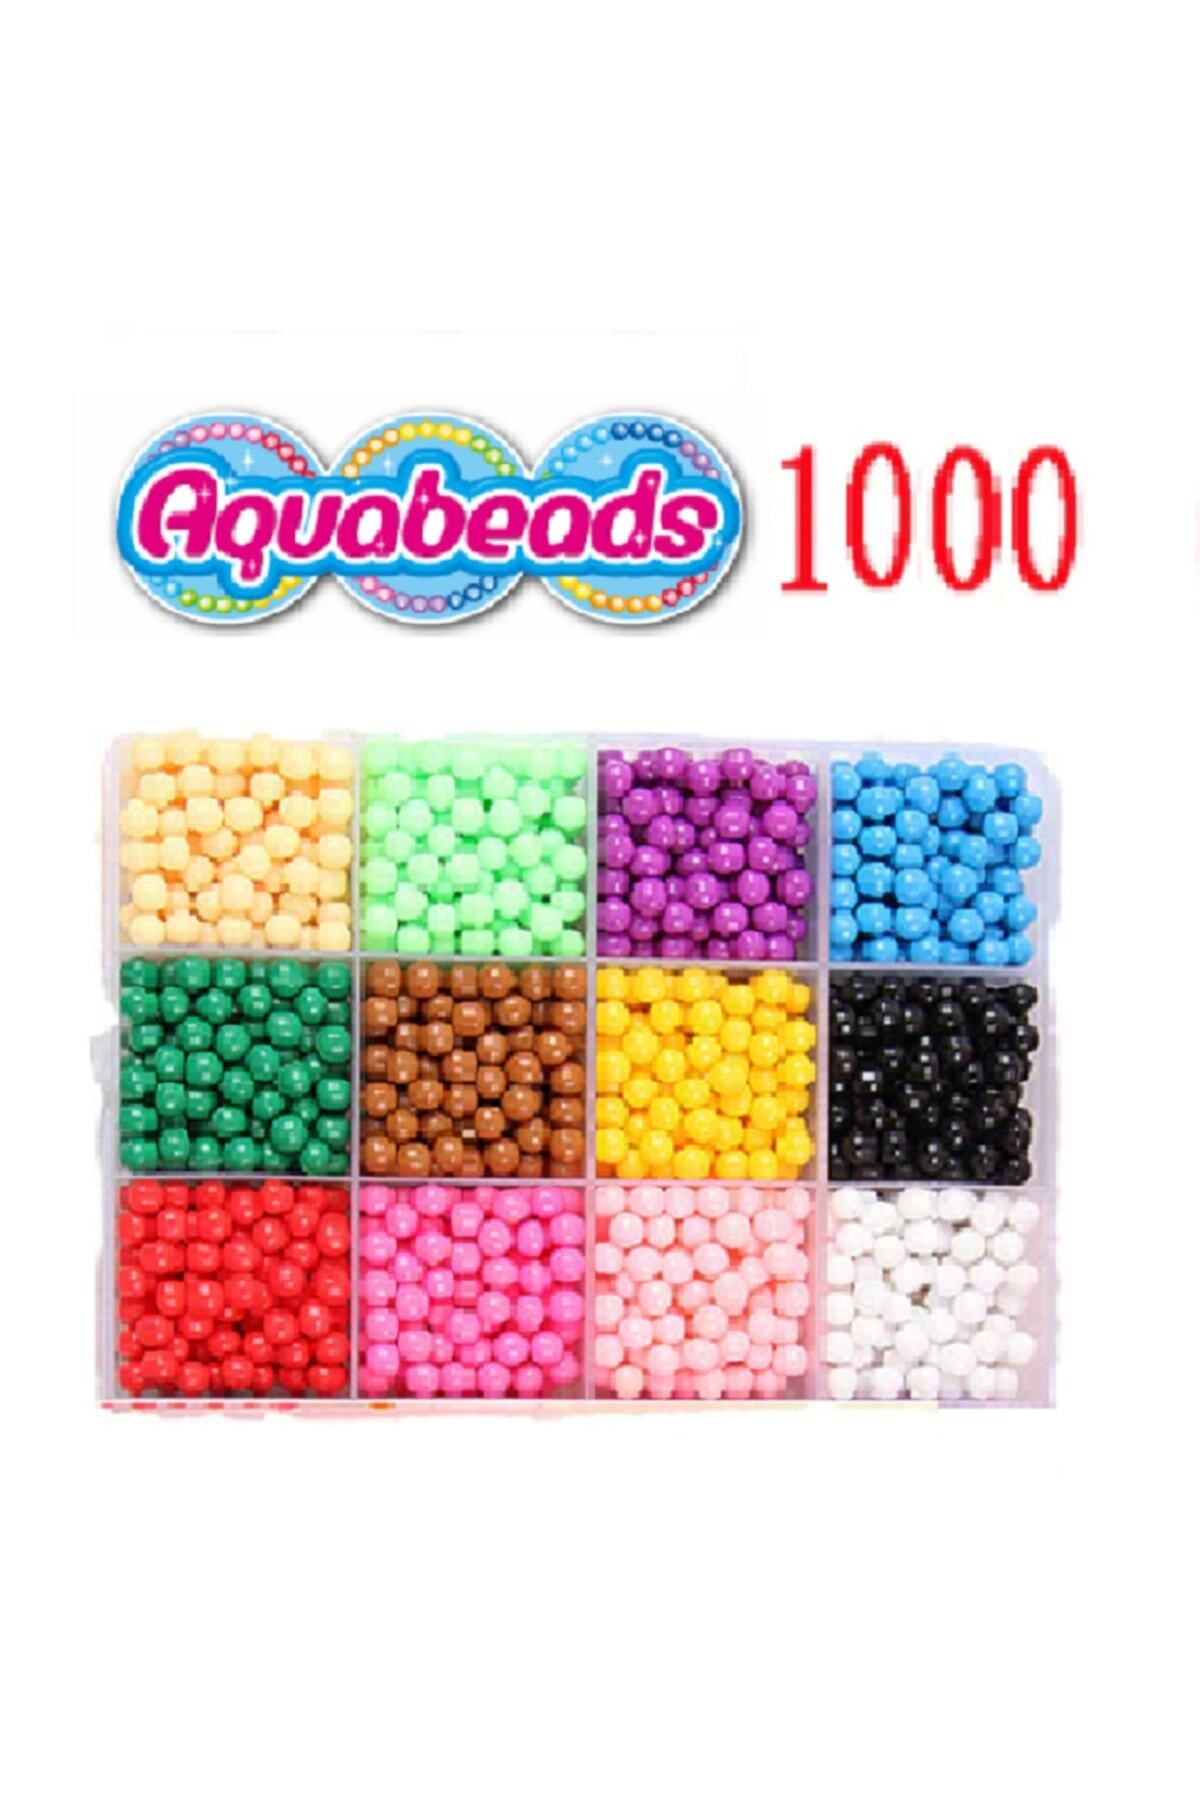 Aqua Beads Yedek Boncuk Seti 10 Renk 1000 Adet Aquabeads